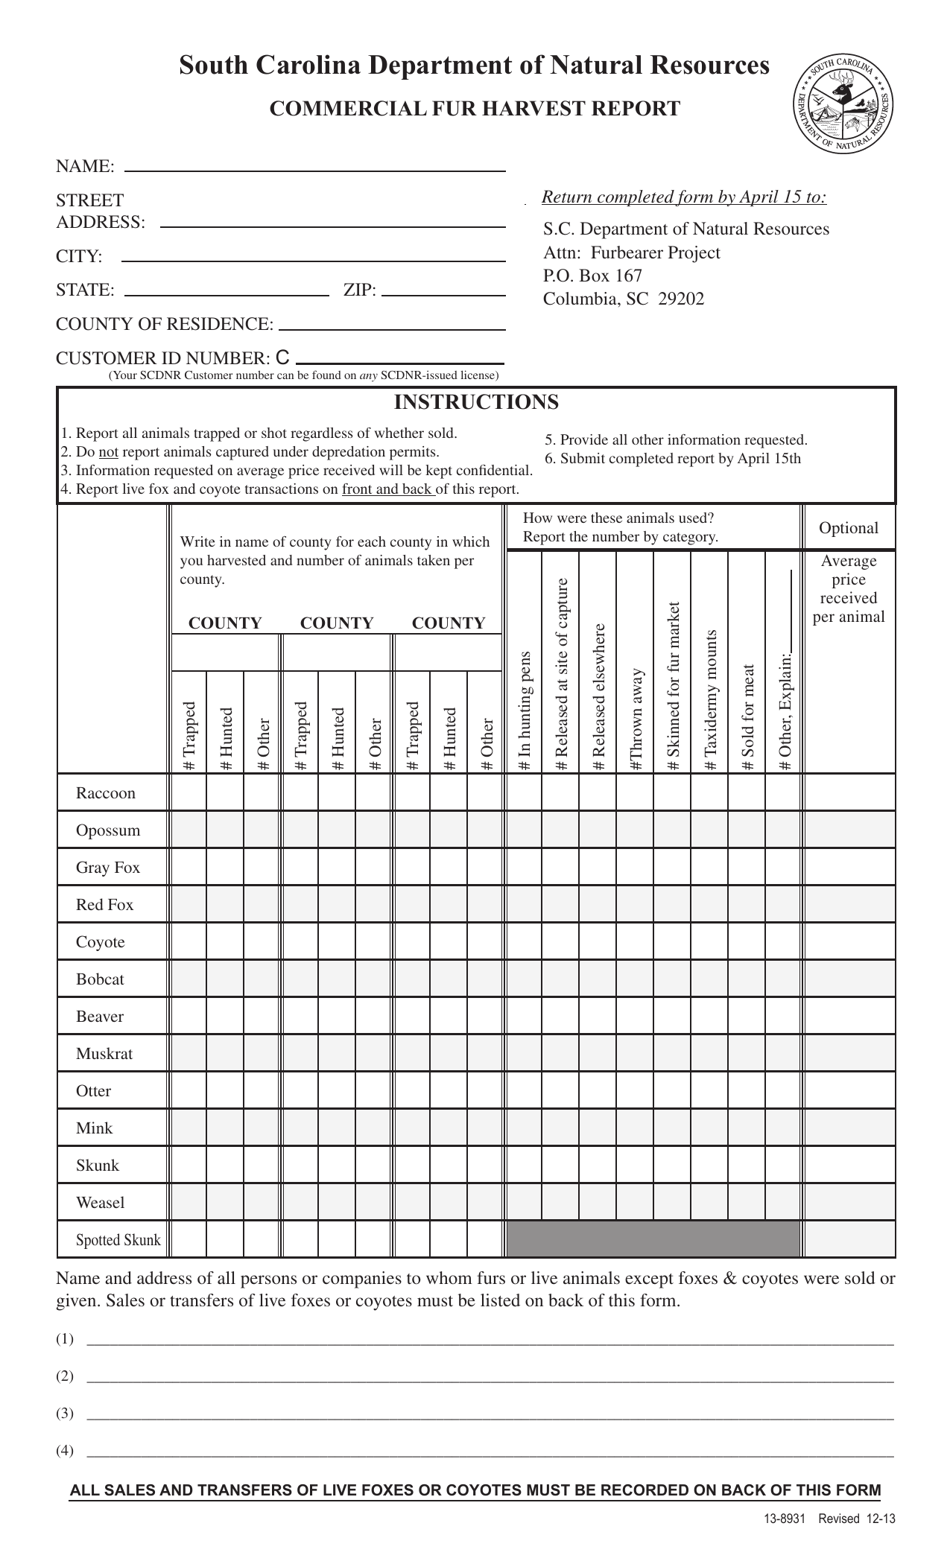 Form 13-8931 Commercial Fur Harvest Report - South Carolina, Page 1